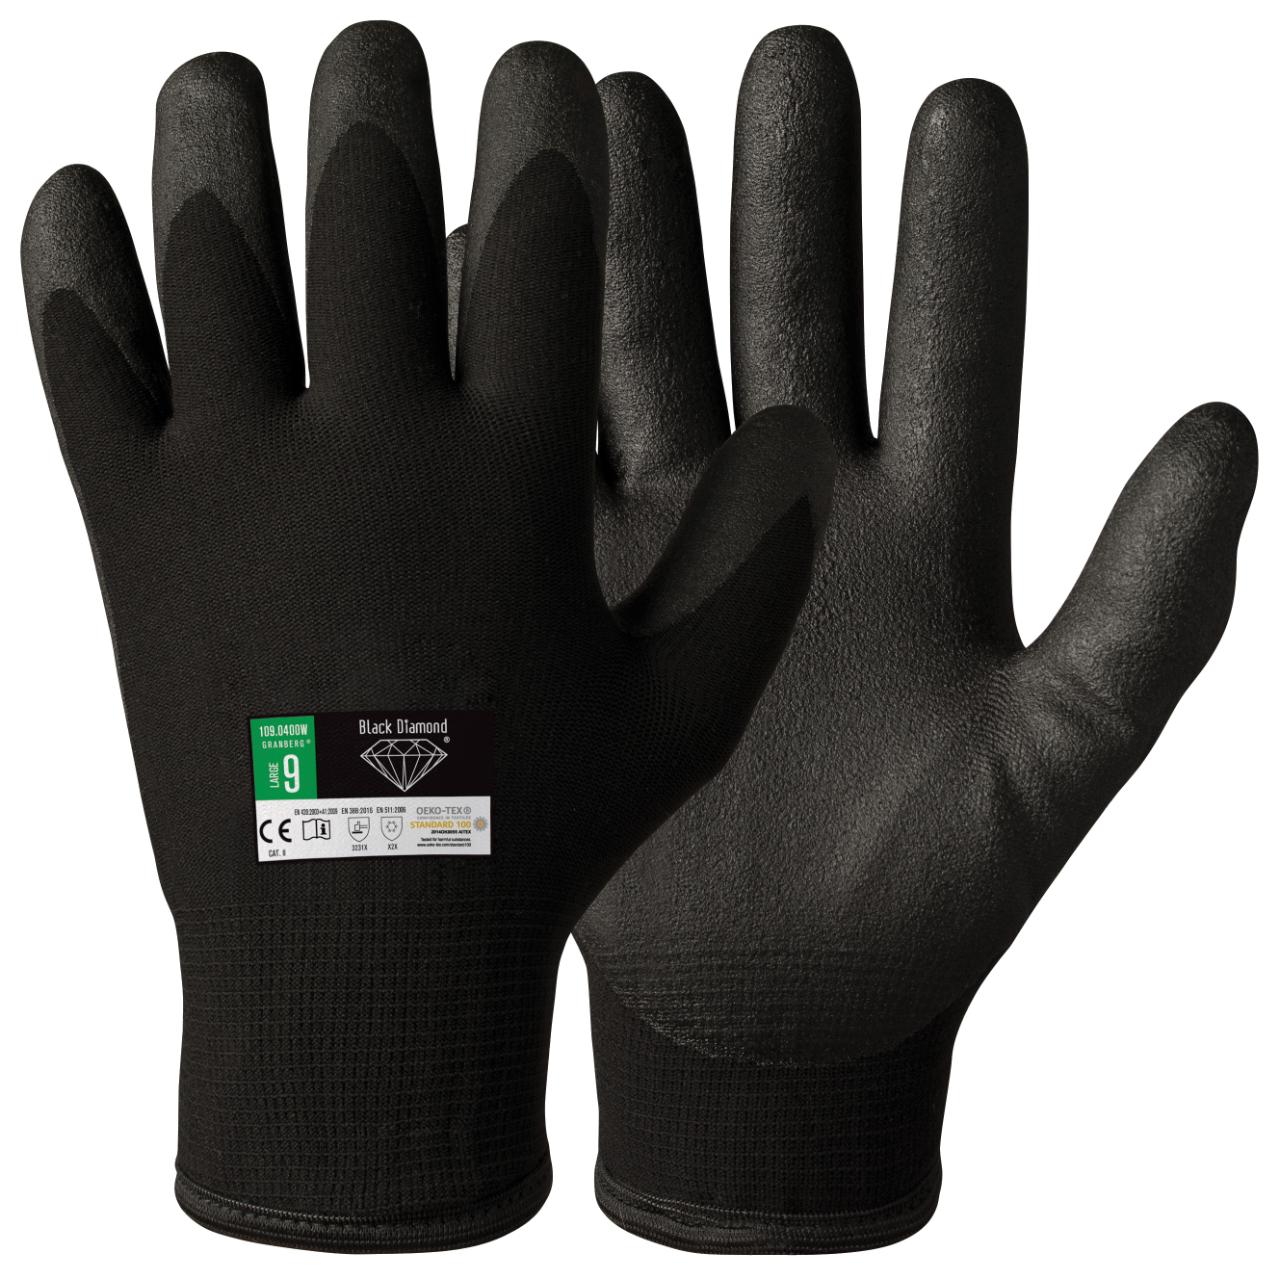 Assembly Winter Gloves Black Diamond, Oeko-Tex® 100 Approved